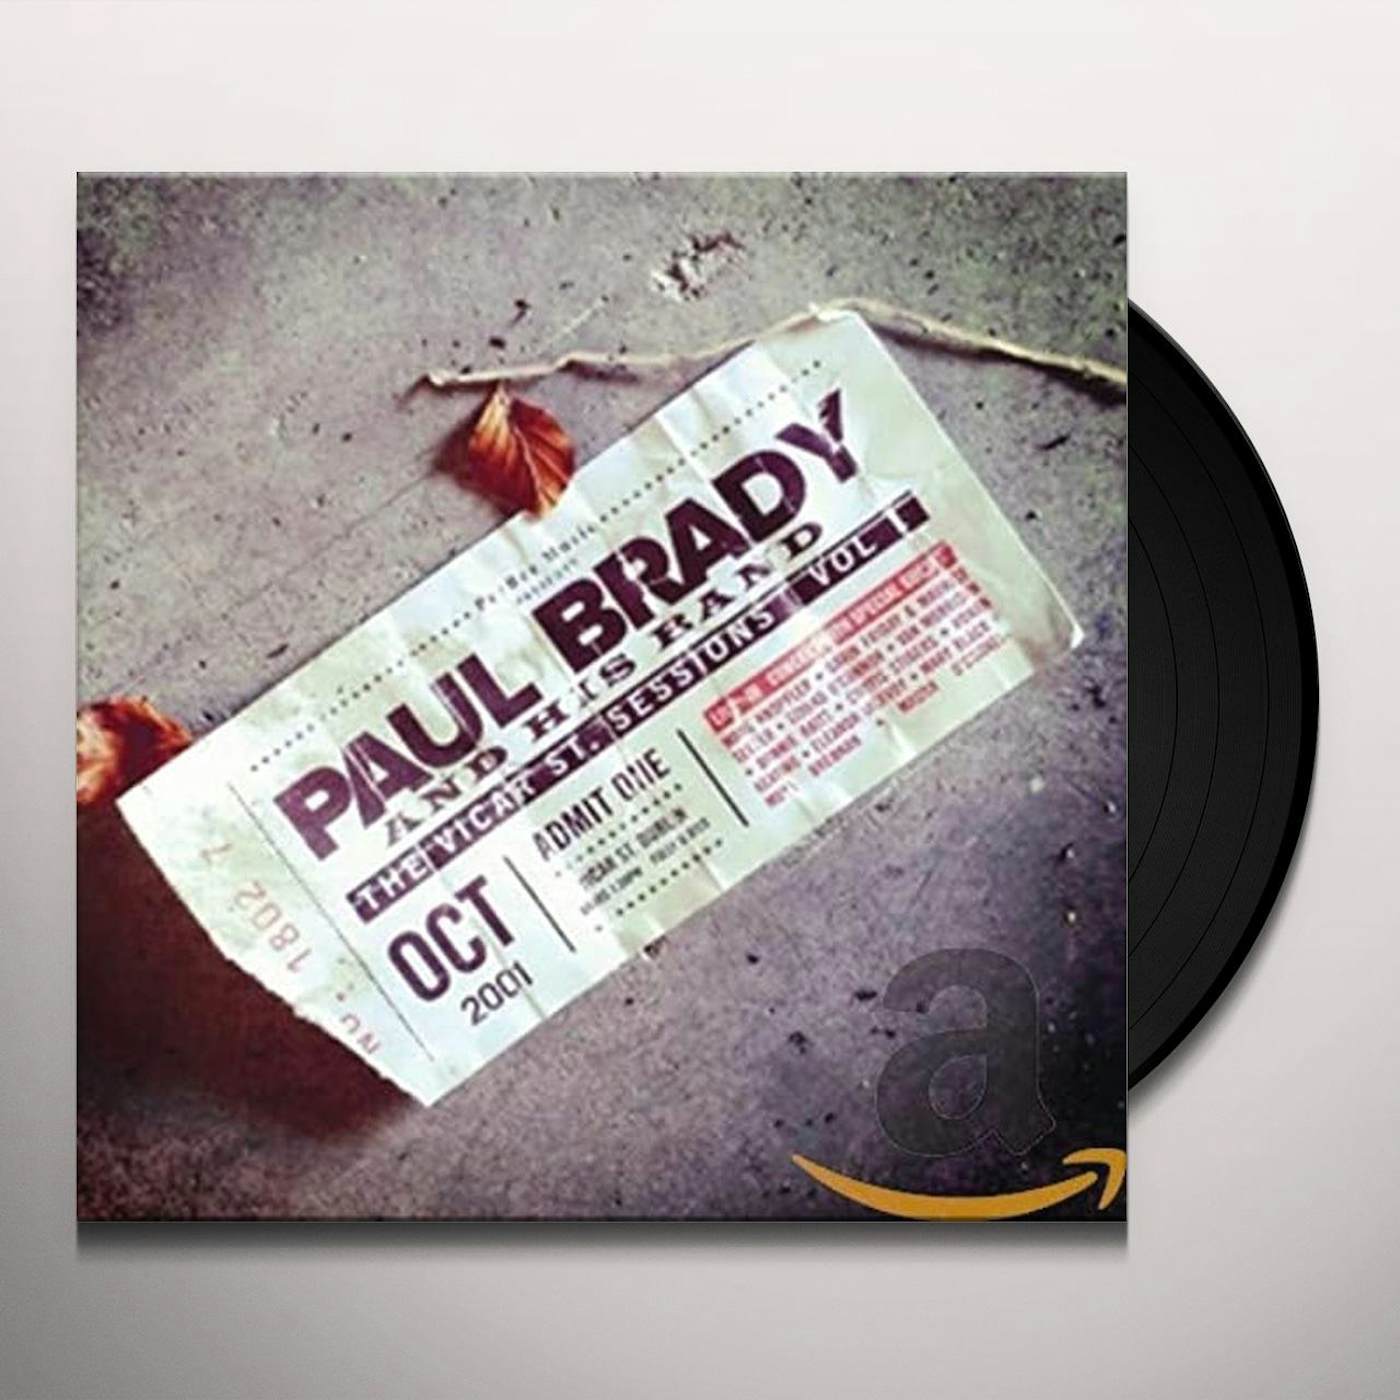 Paul Brady VICAR ST. SESSIONS 1 Vinyl Record - UK Release